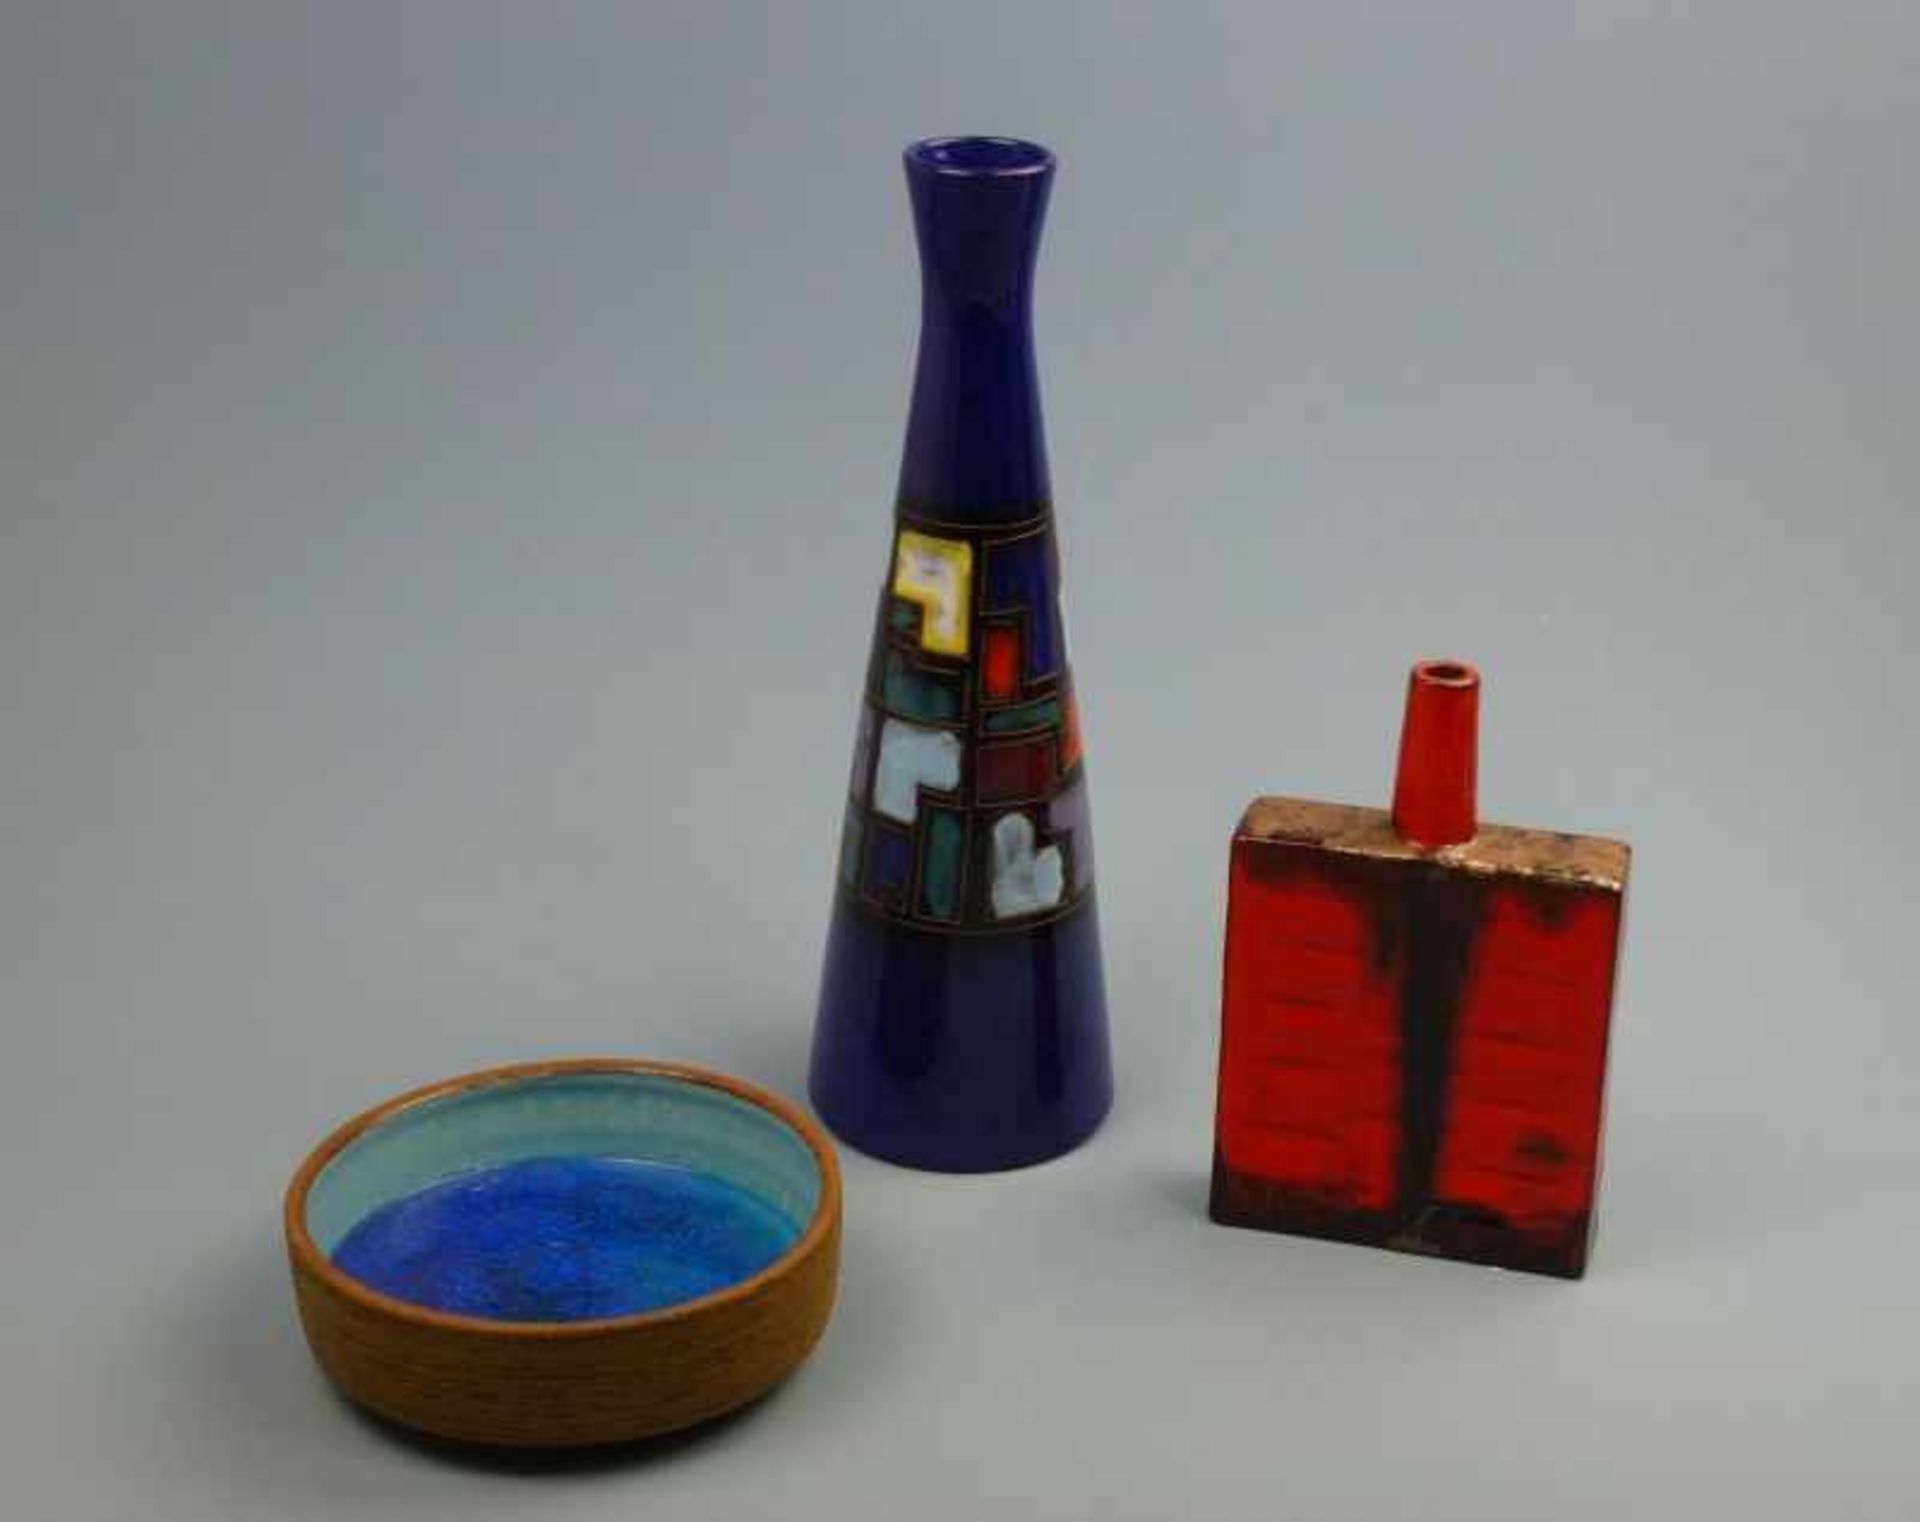 Konvolut Moderne Keramik, 1960er Jahre 2 Vasen u. Schale, bunte Glasuren, H 6 -35cm